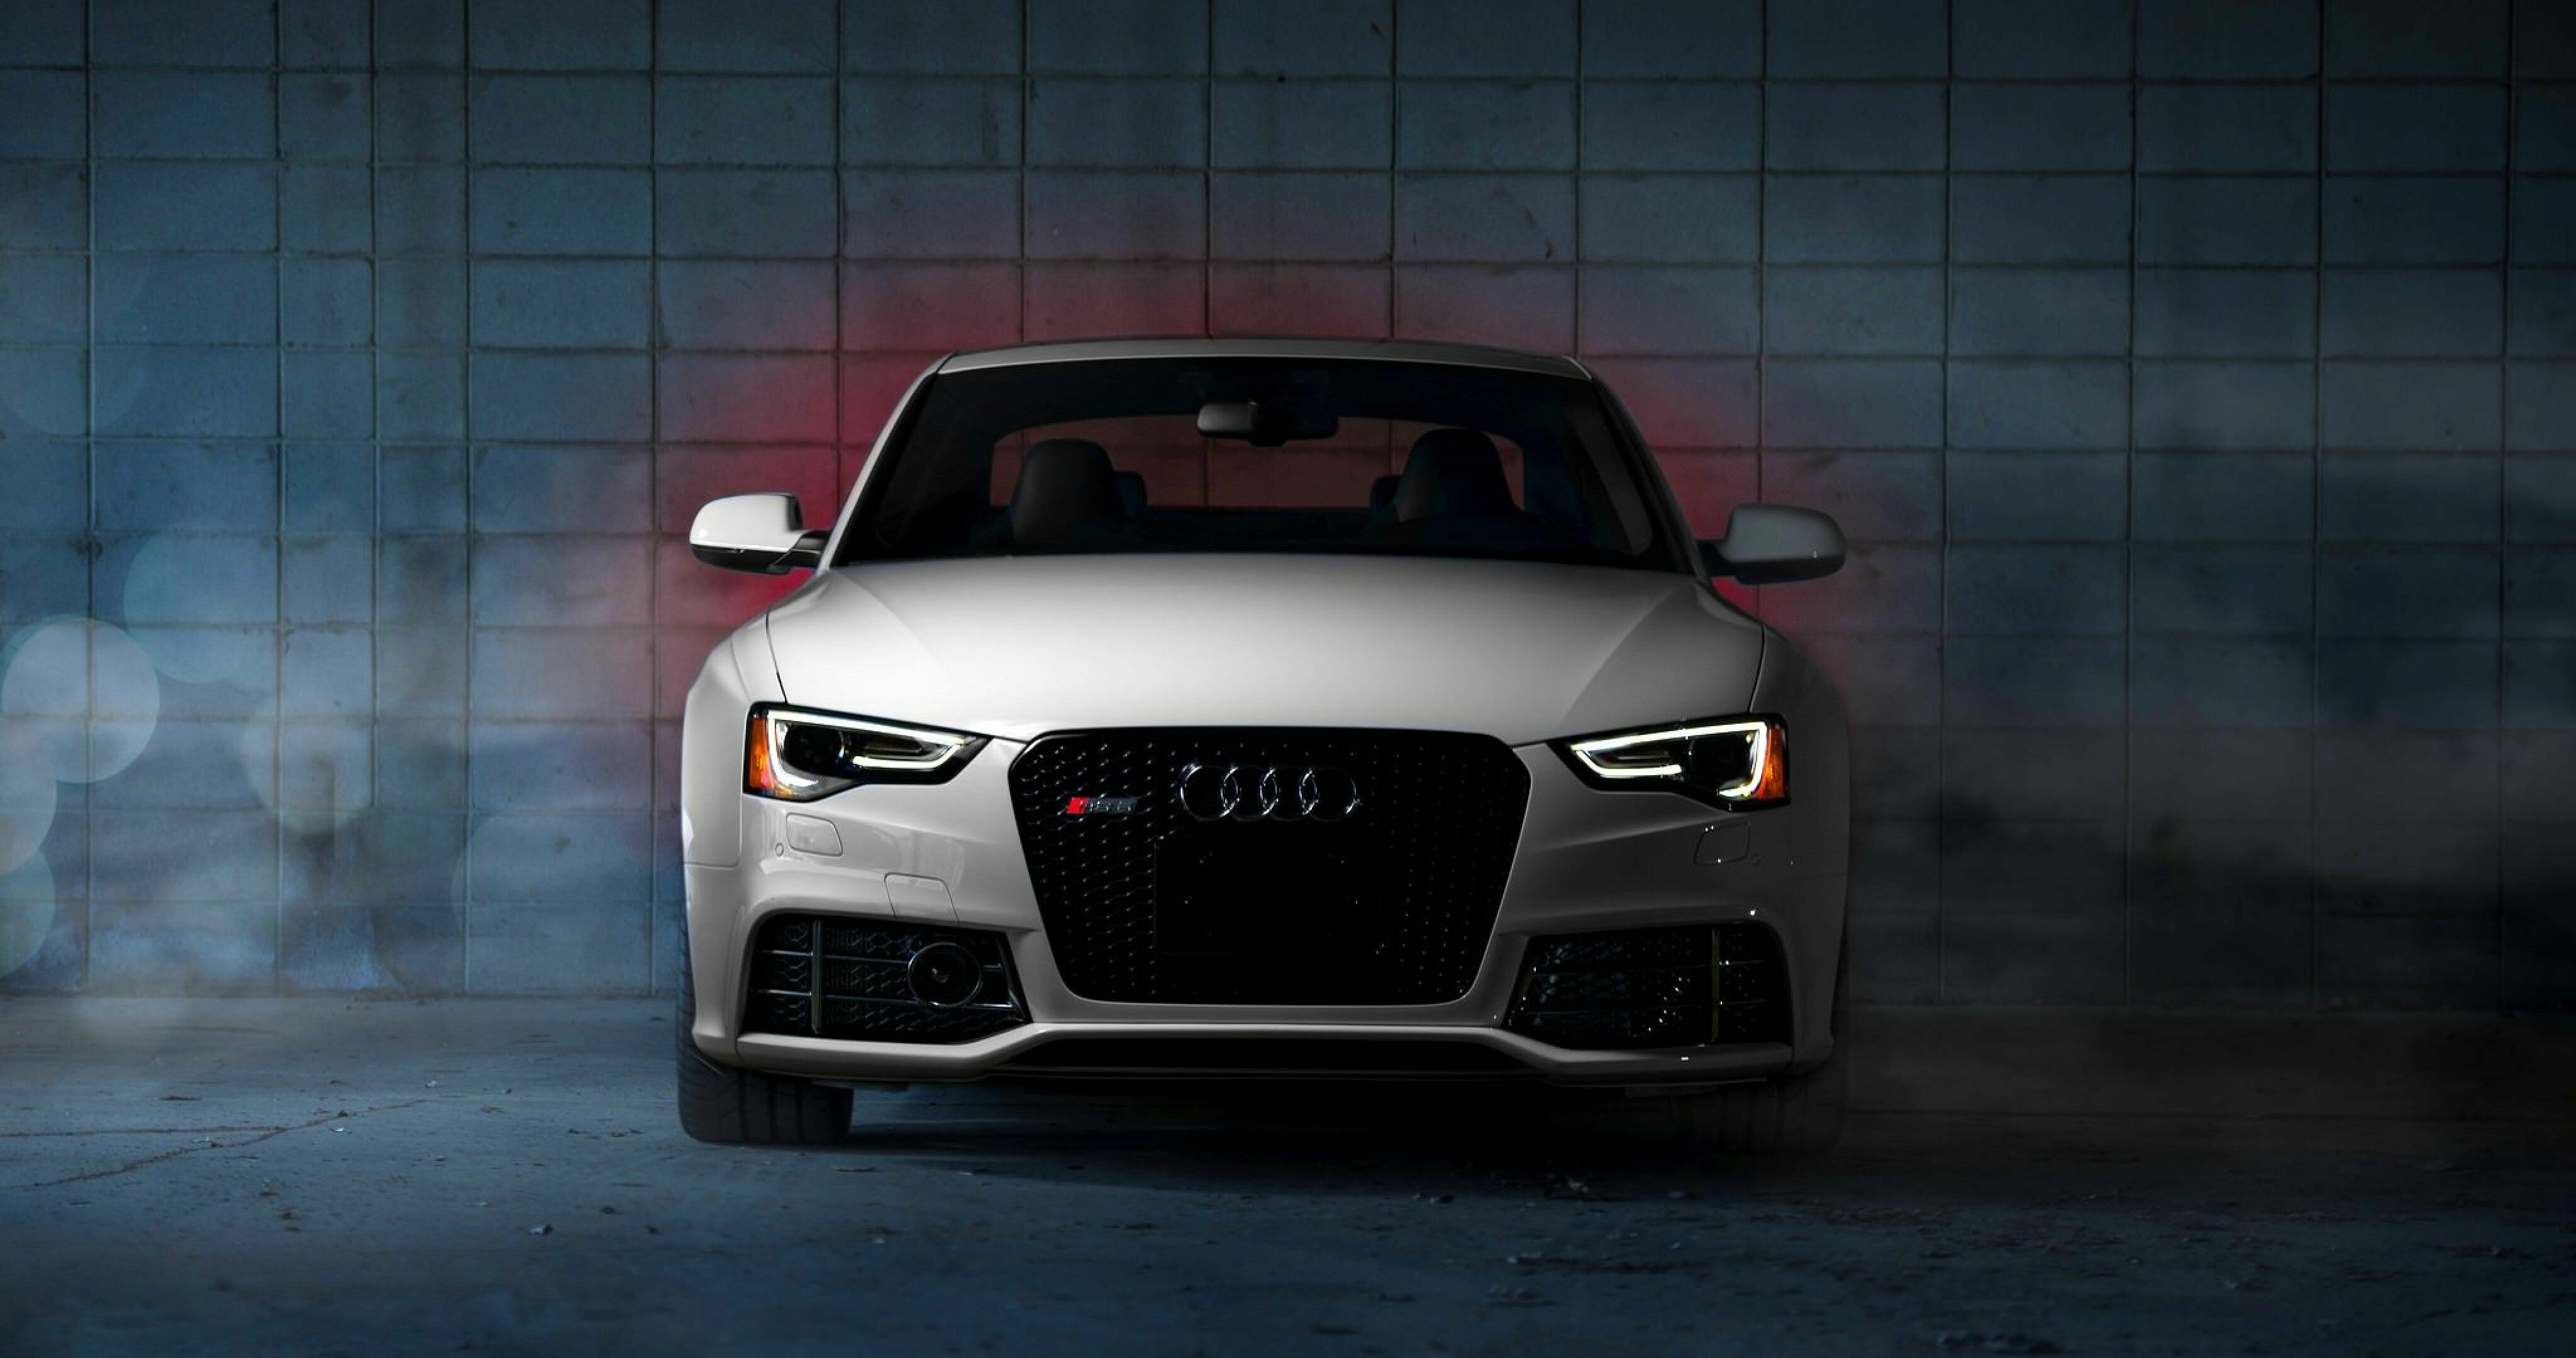 Top 999+ Audi Wallpaper Full HD, 4K✓Free to Use